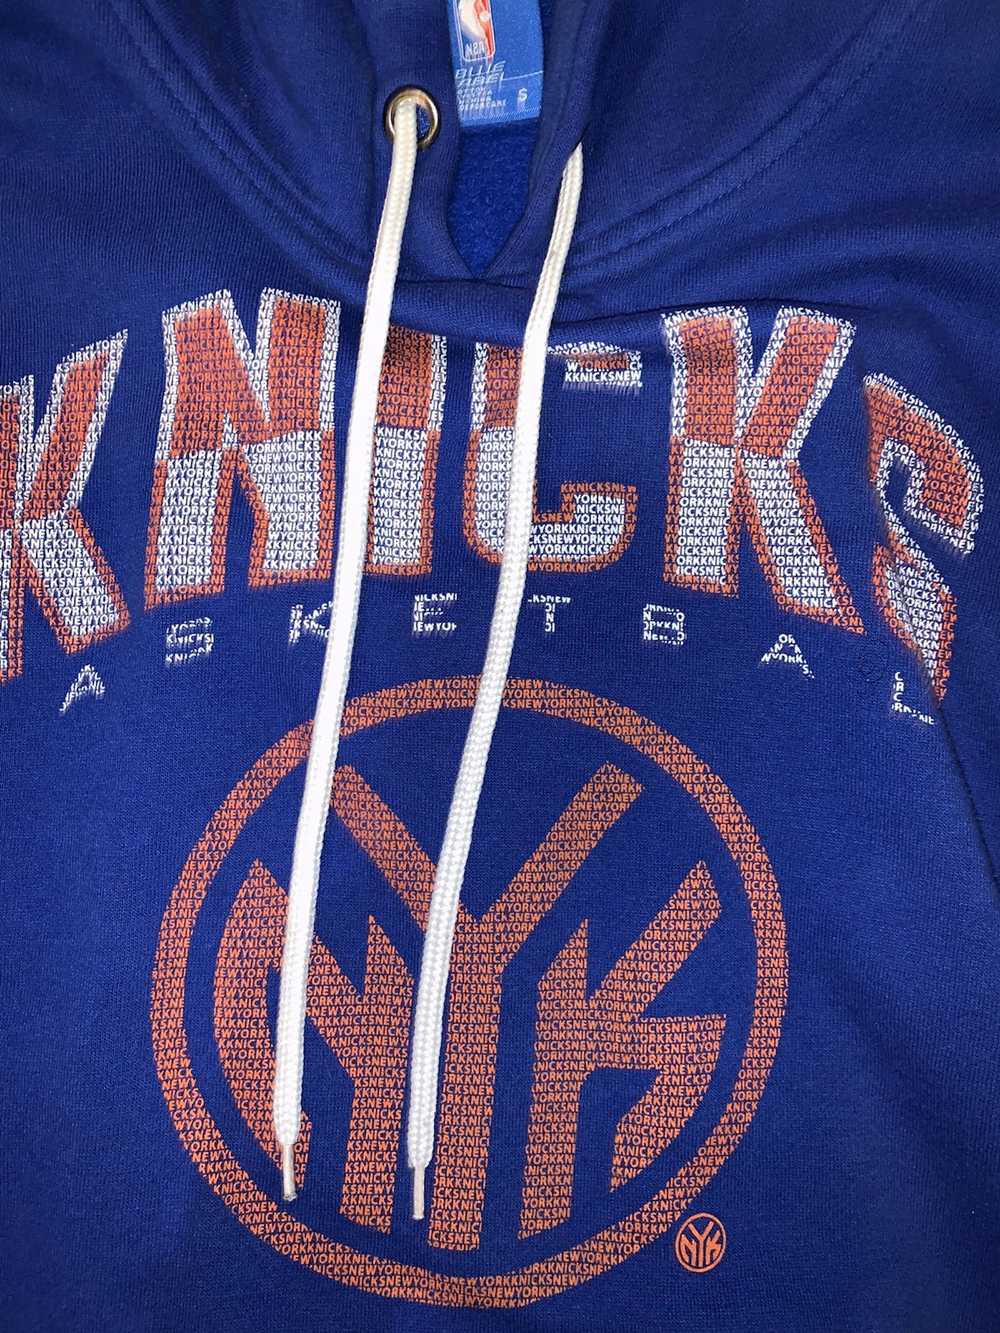 NBA New York Knicks Hoodie - image 3